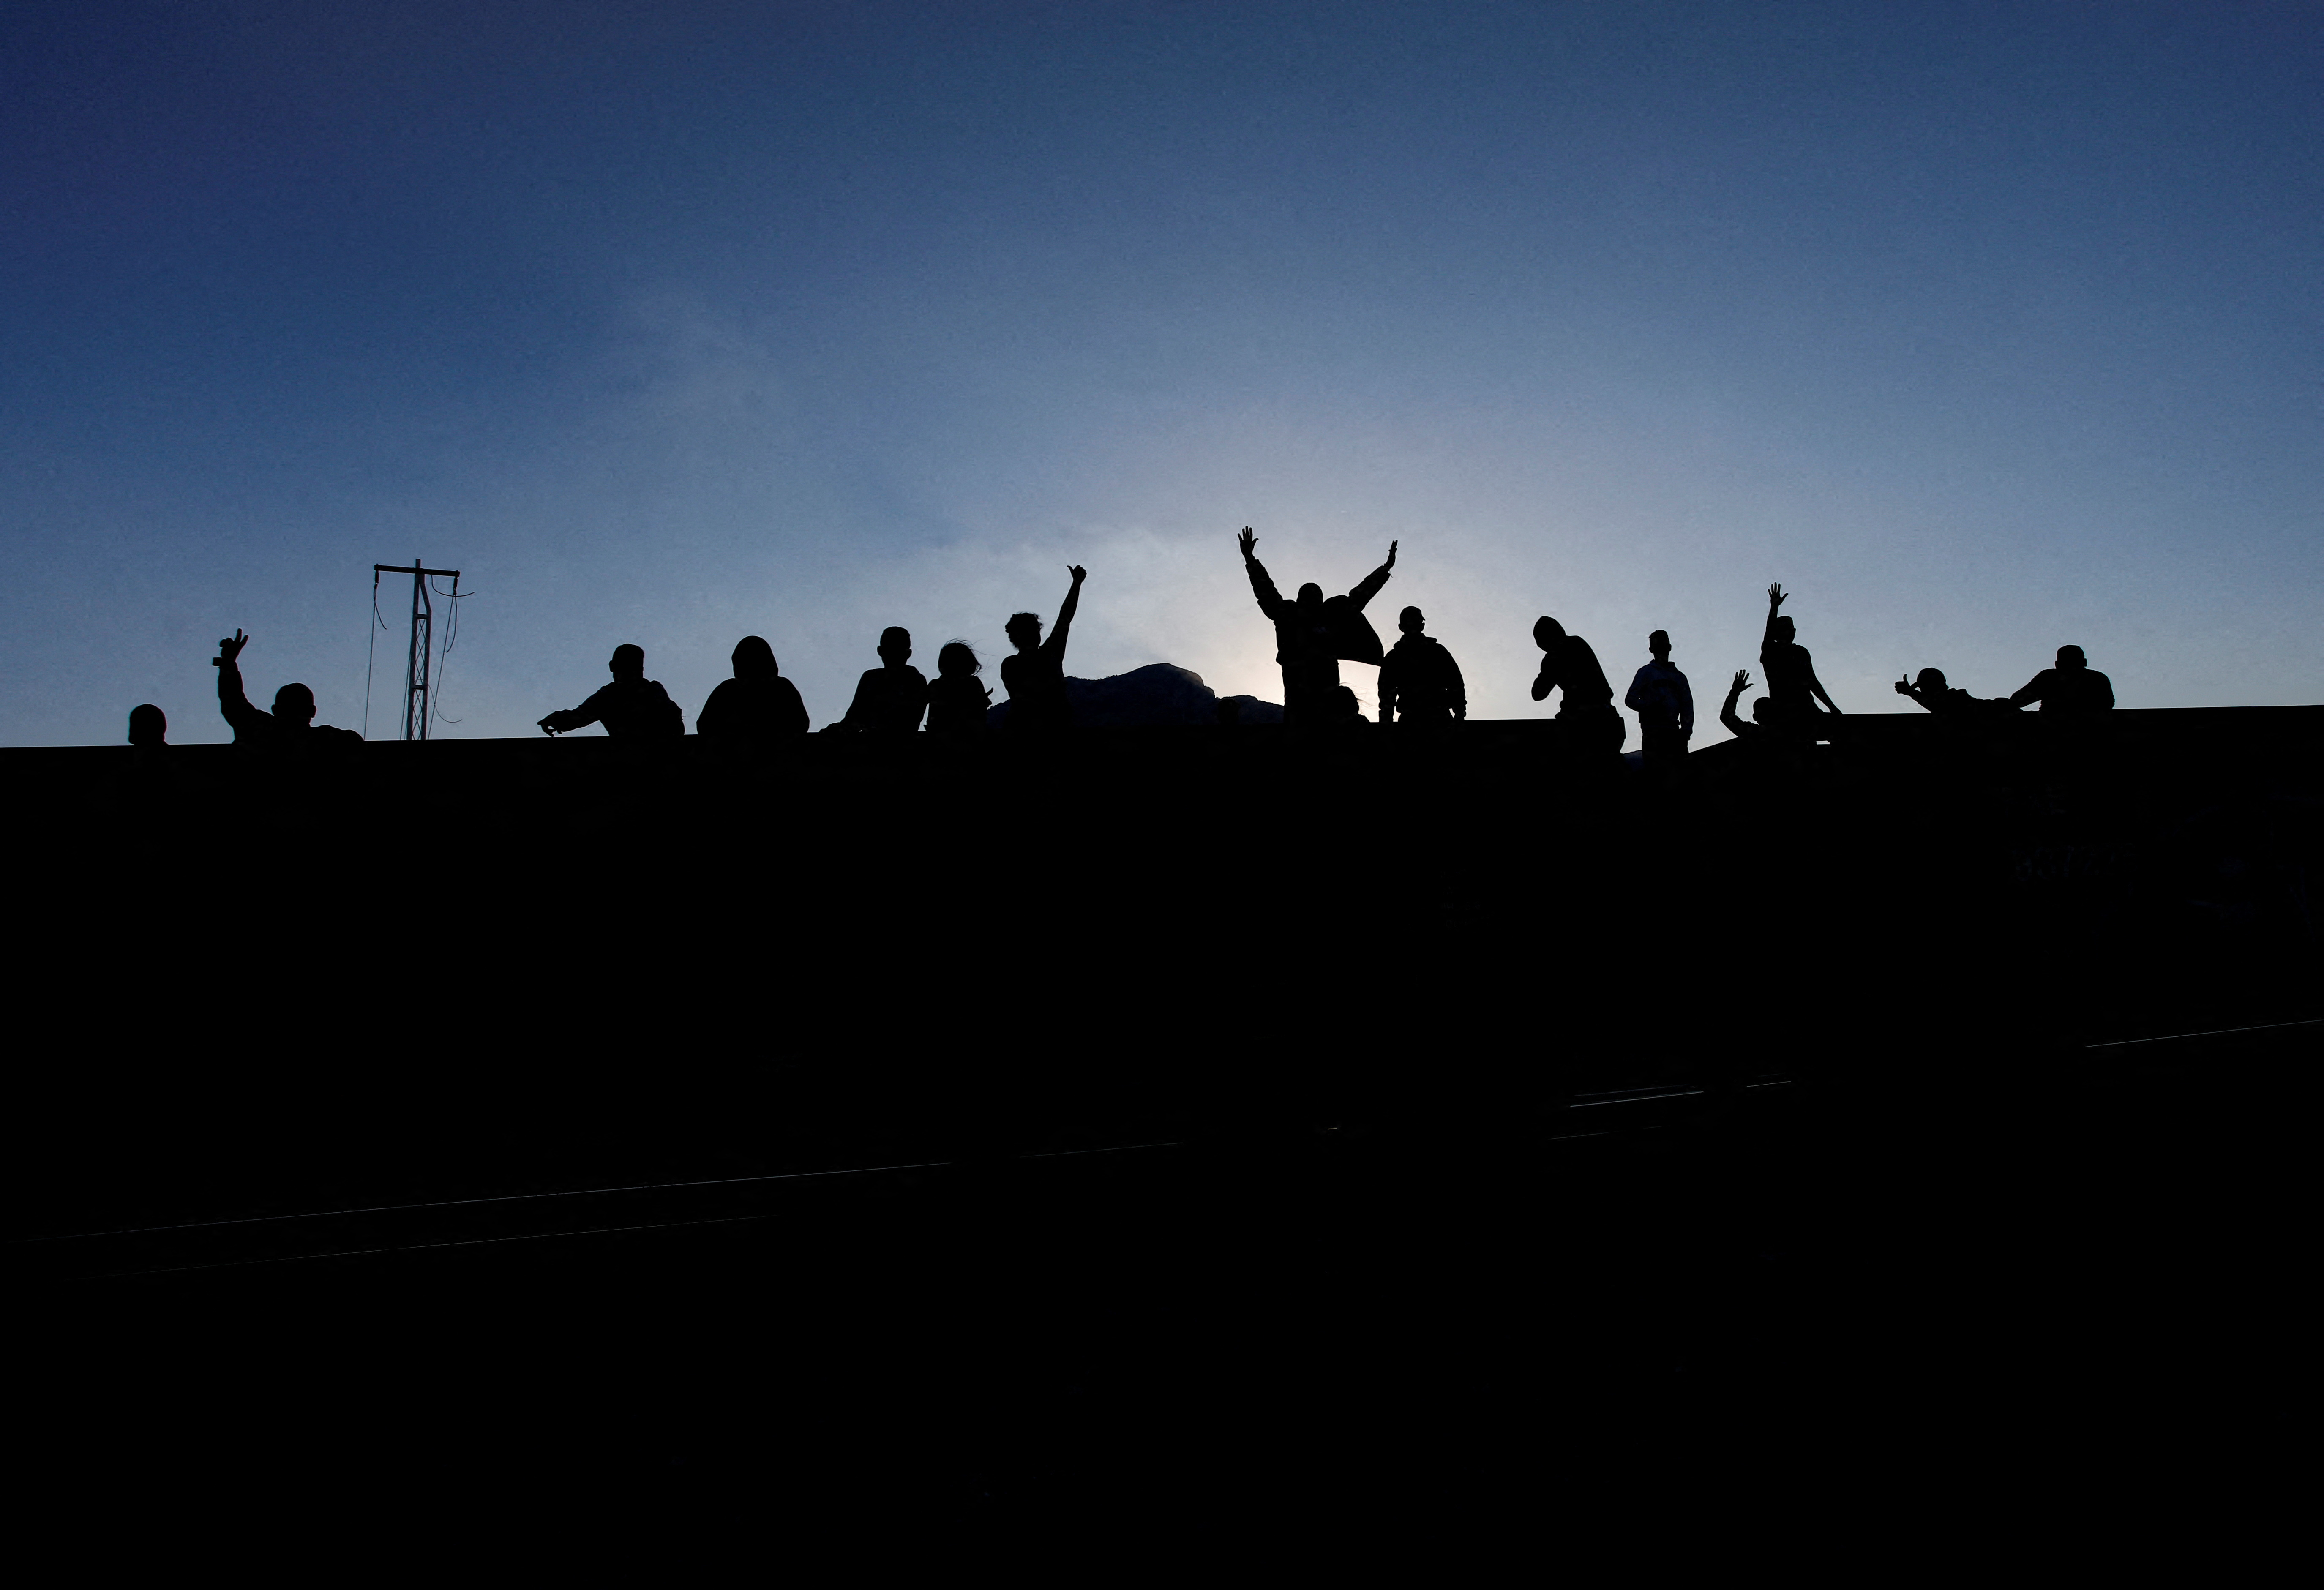 Asylum seekers heading to the U.S. travel on a train, in El Carmen